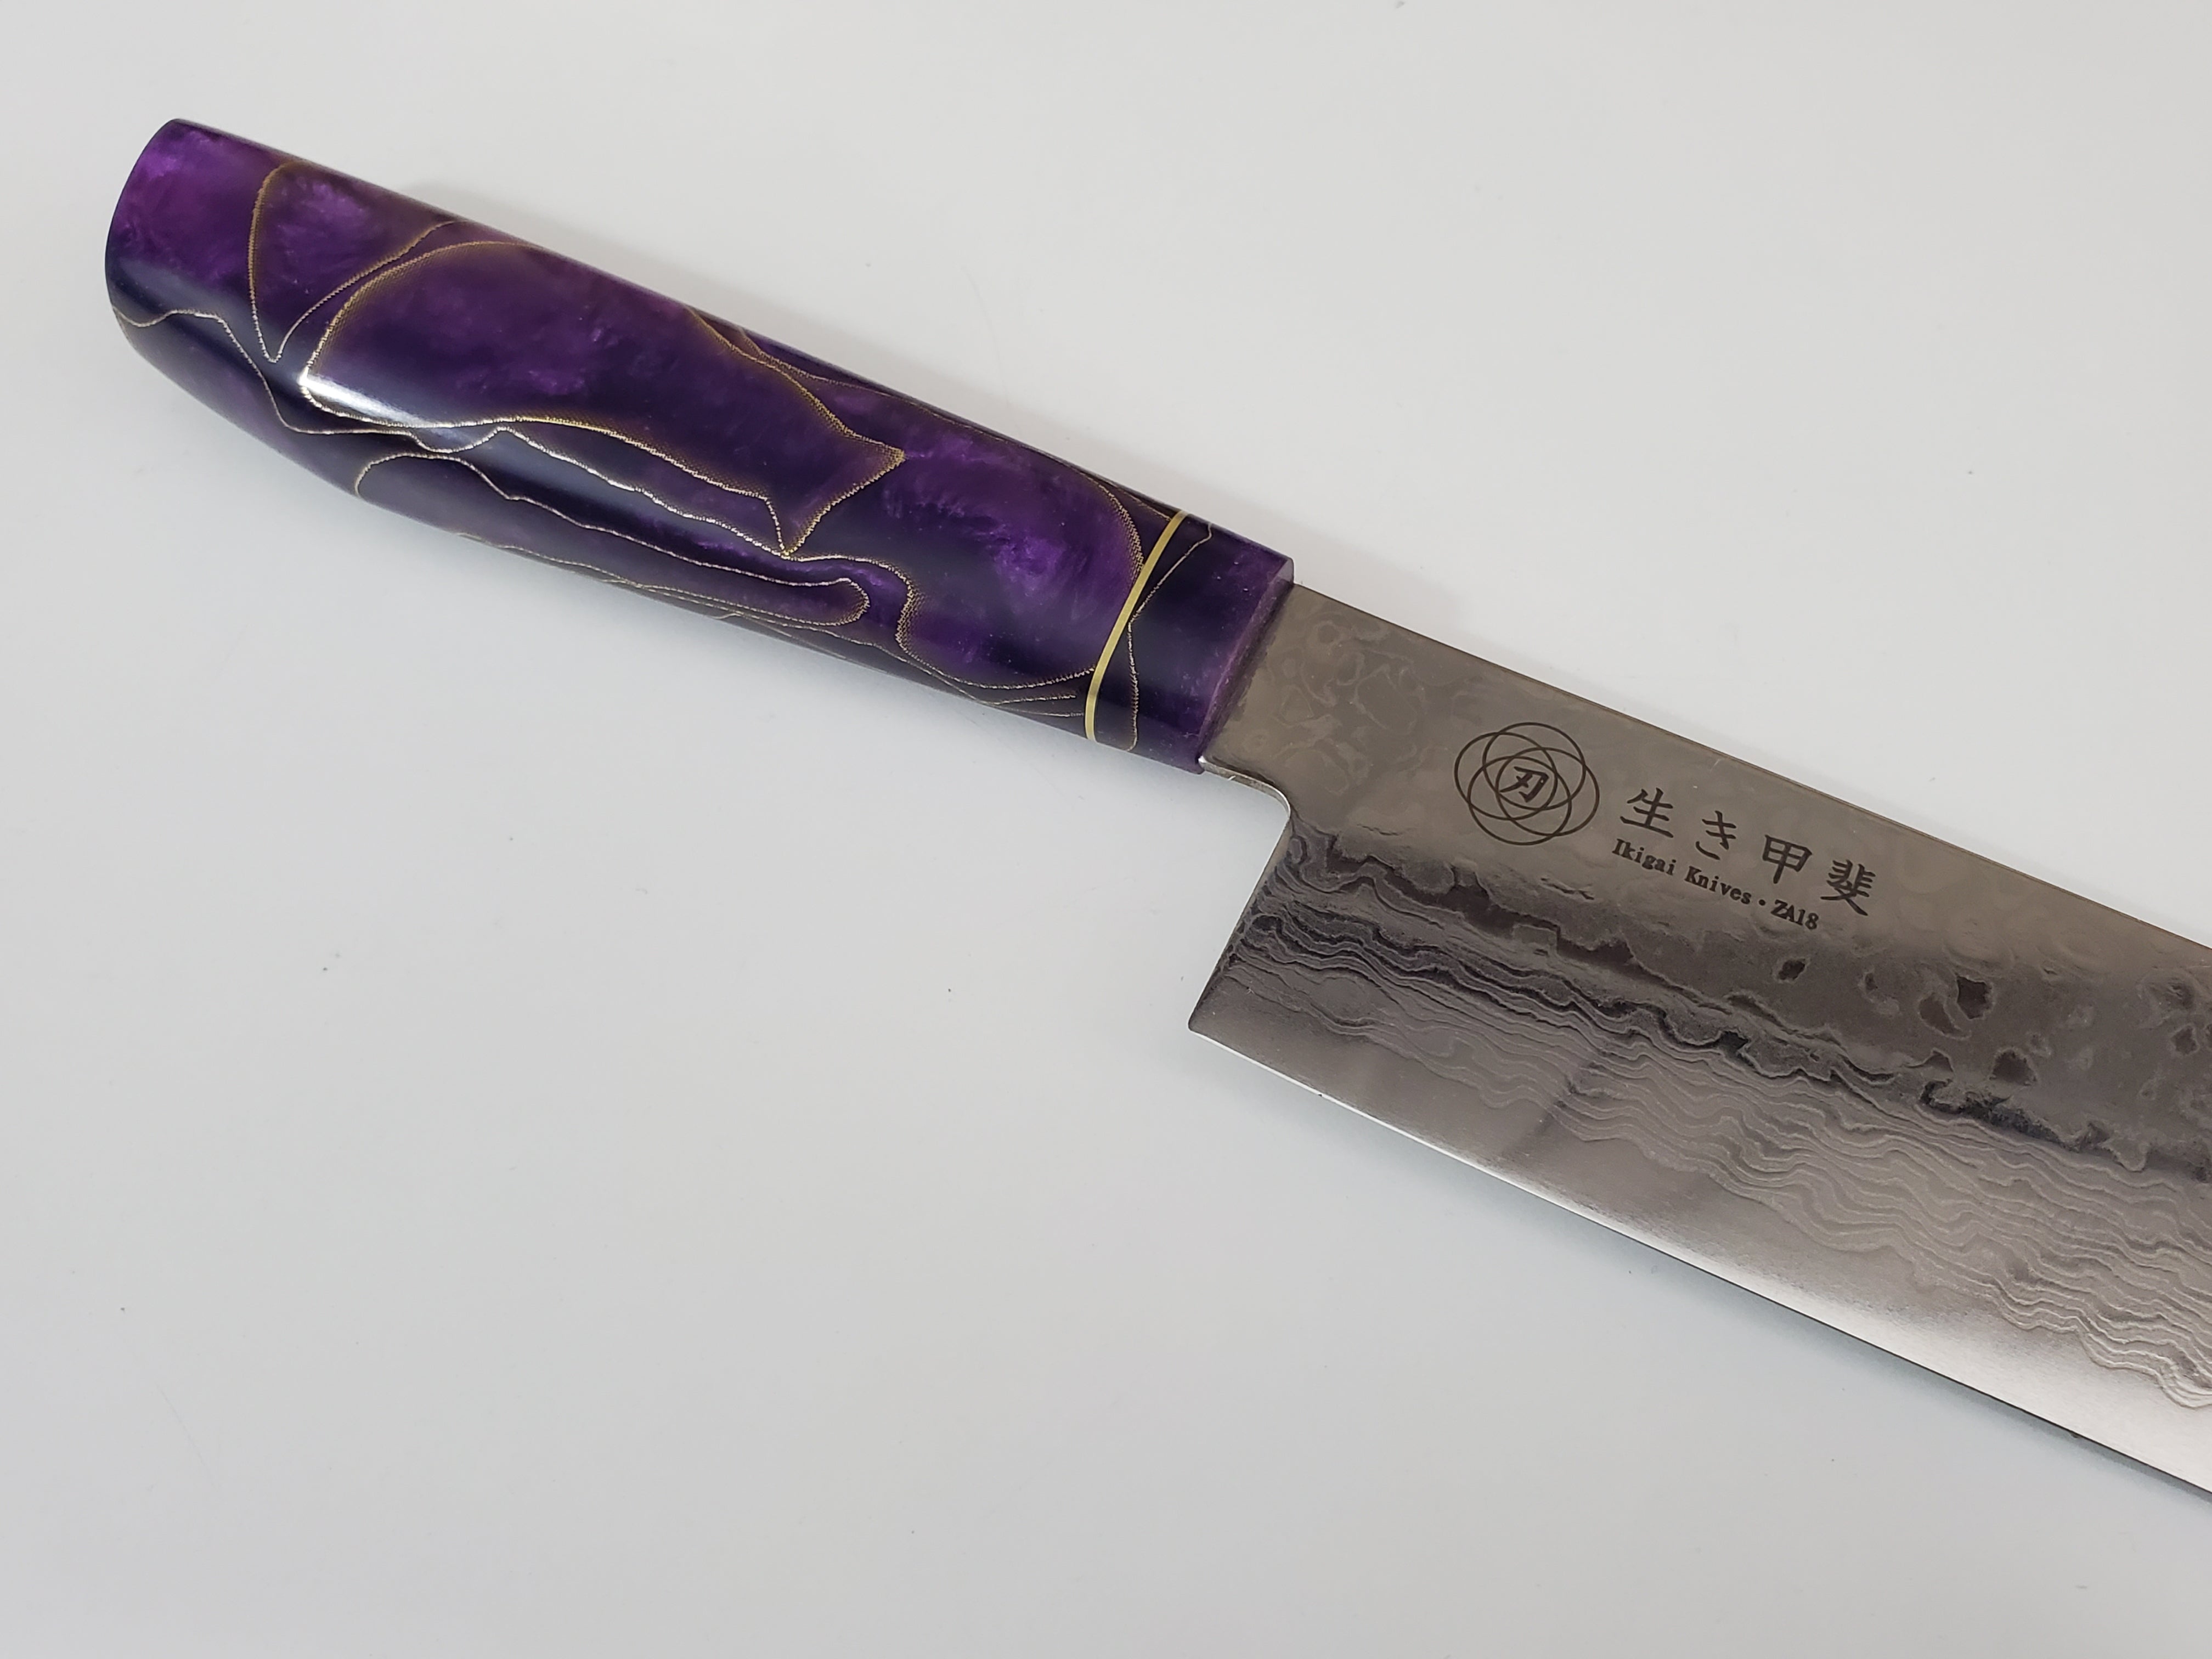 ZA18 Damascus Usuba Vegetable knife - 165mm